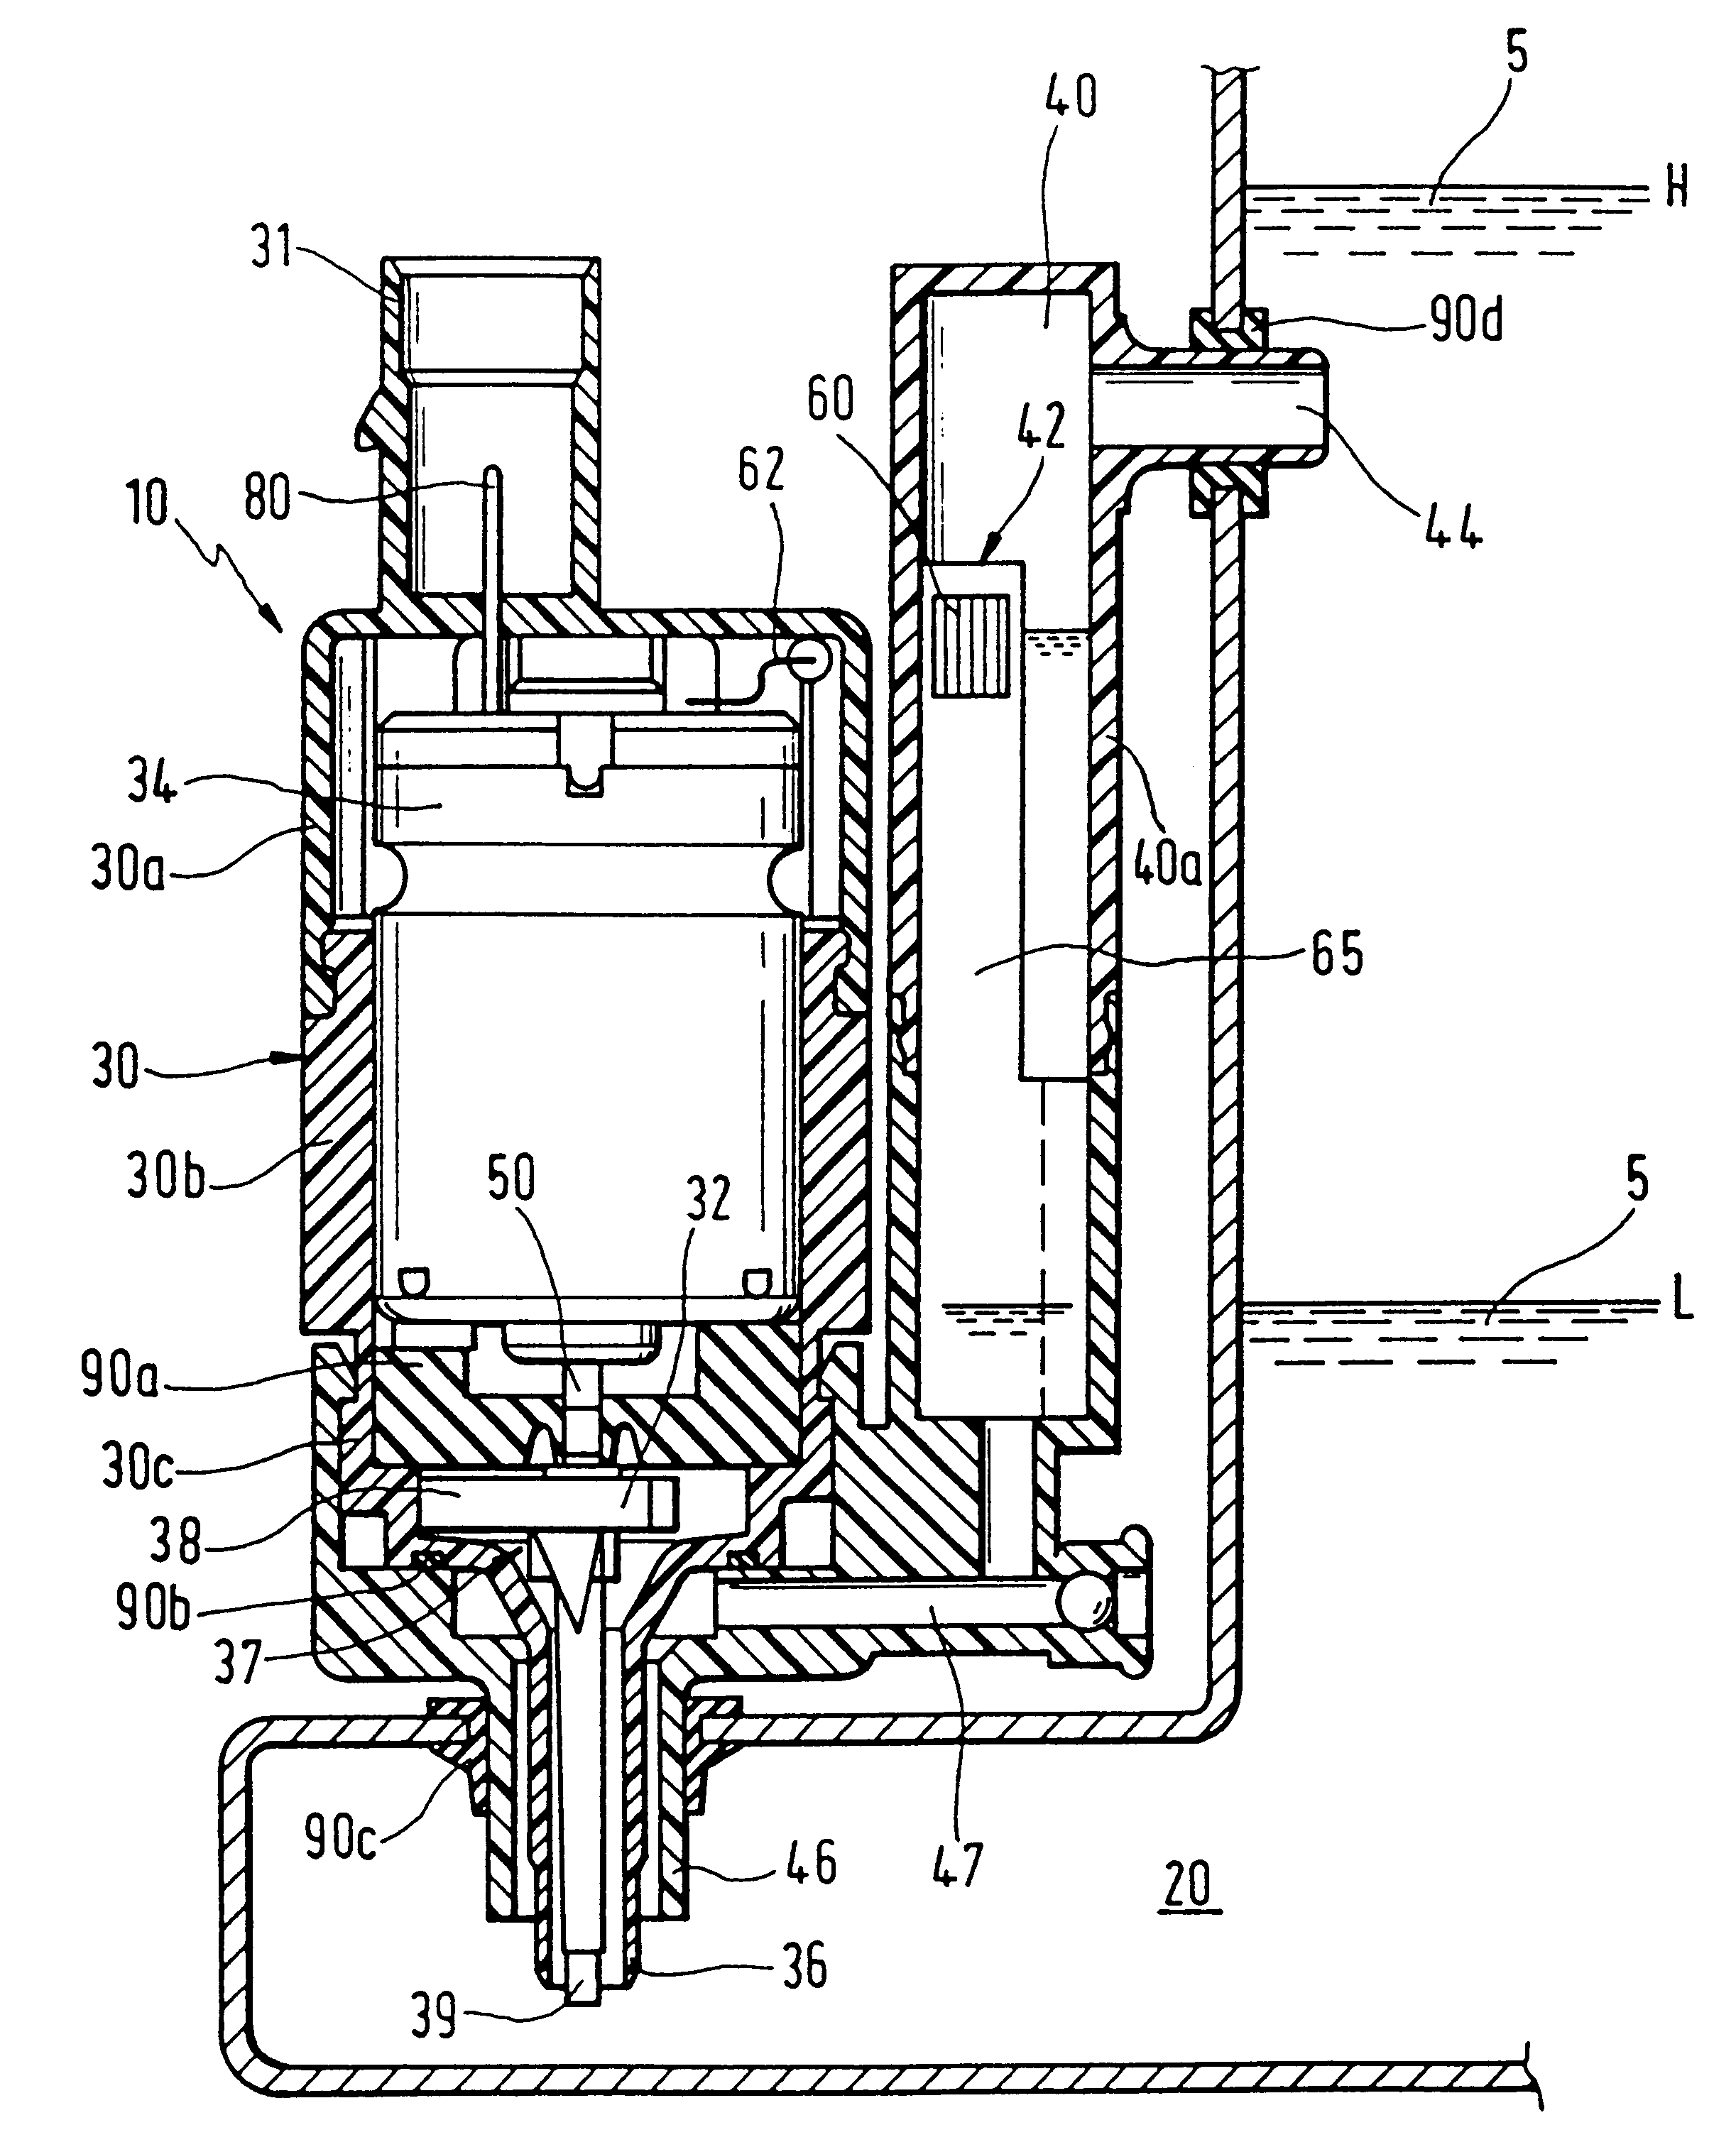 Pump arrangement for liquid tanks